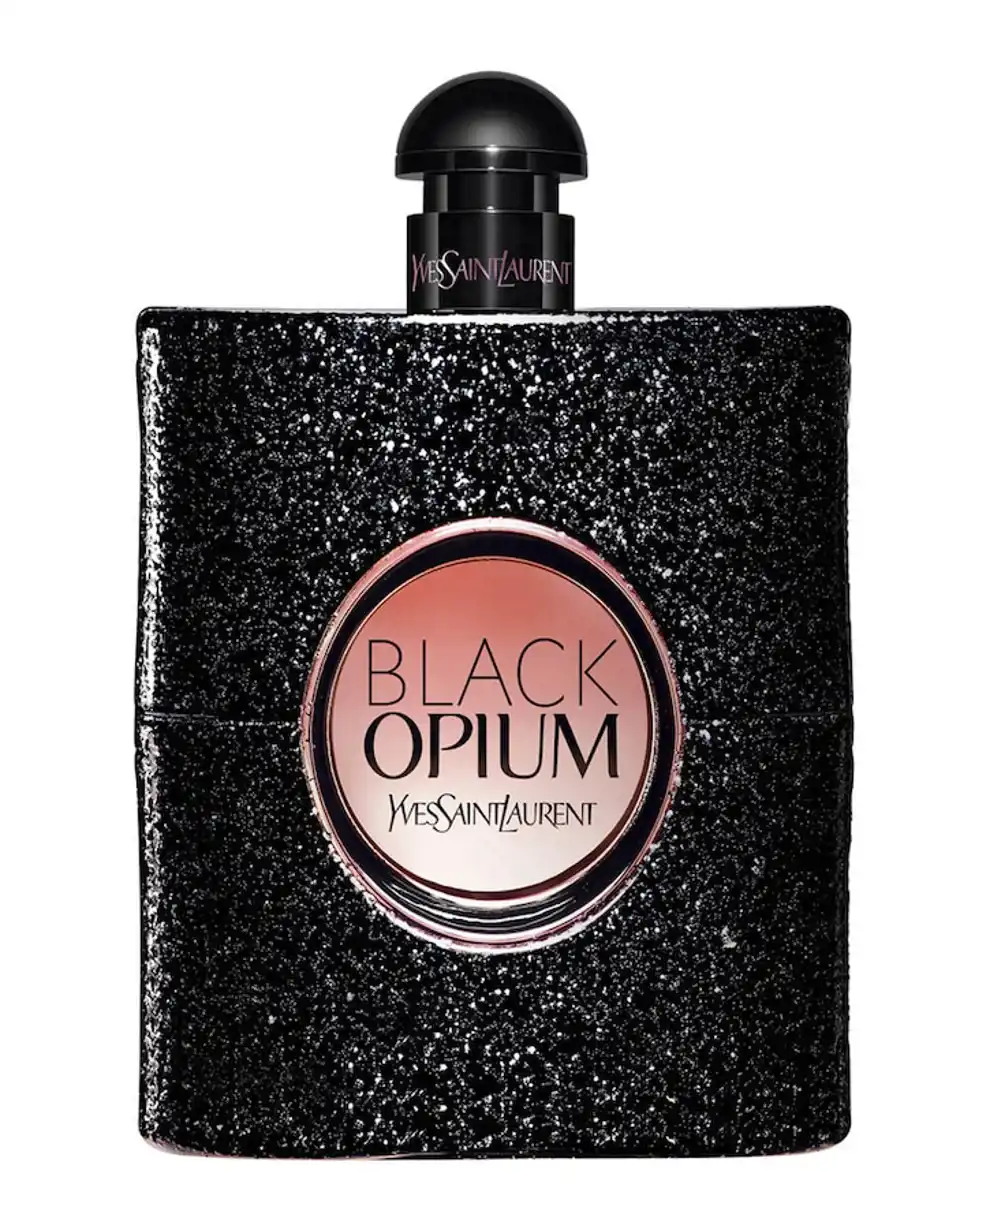 Black Opium (Yves Saint Laurent)